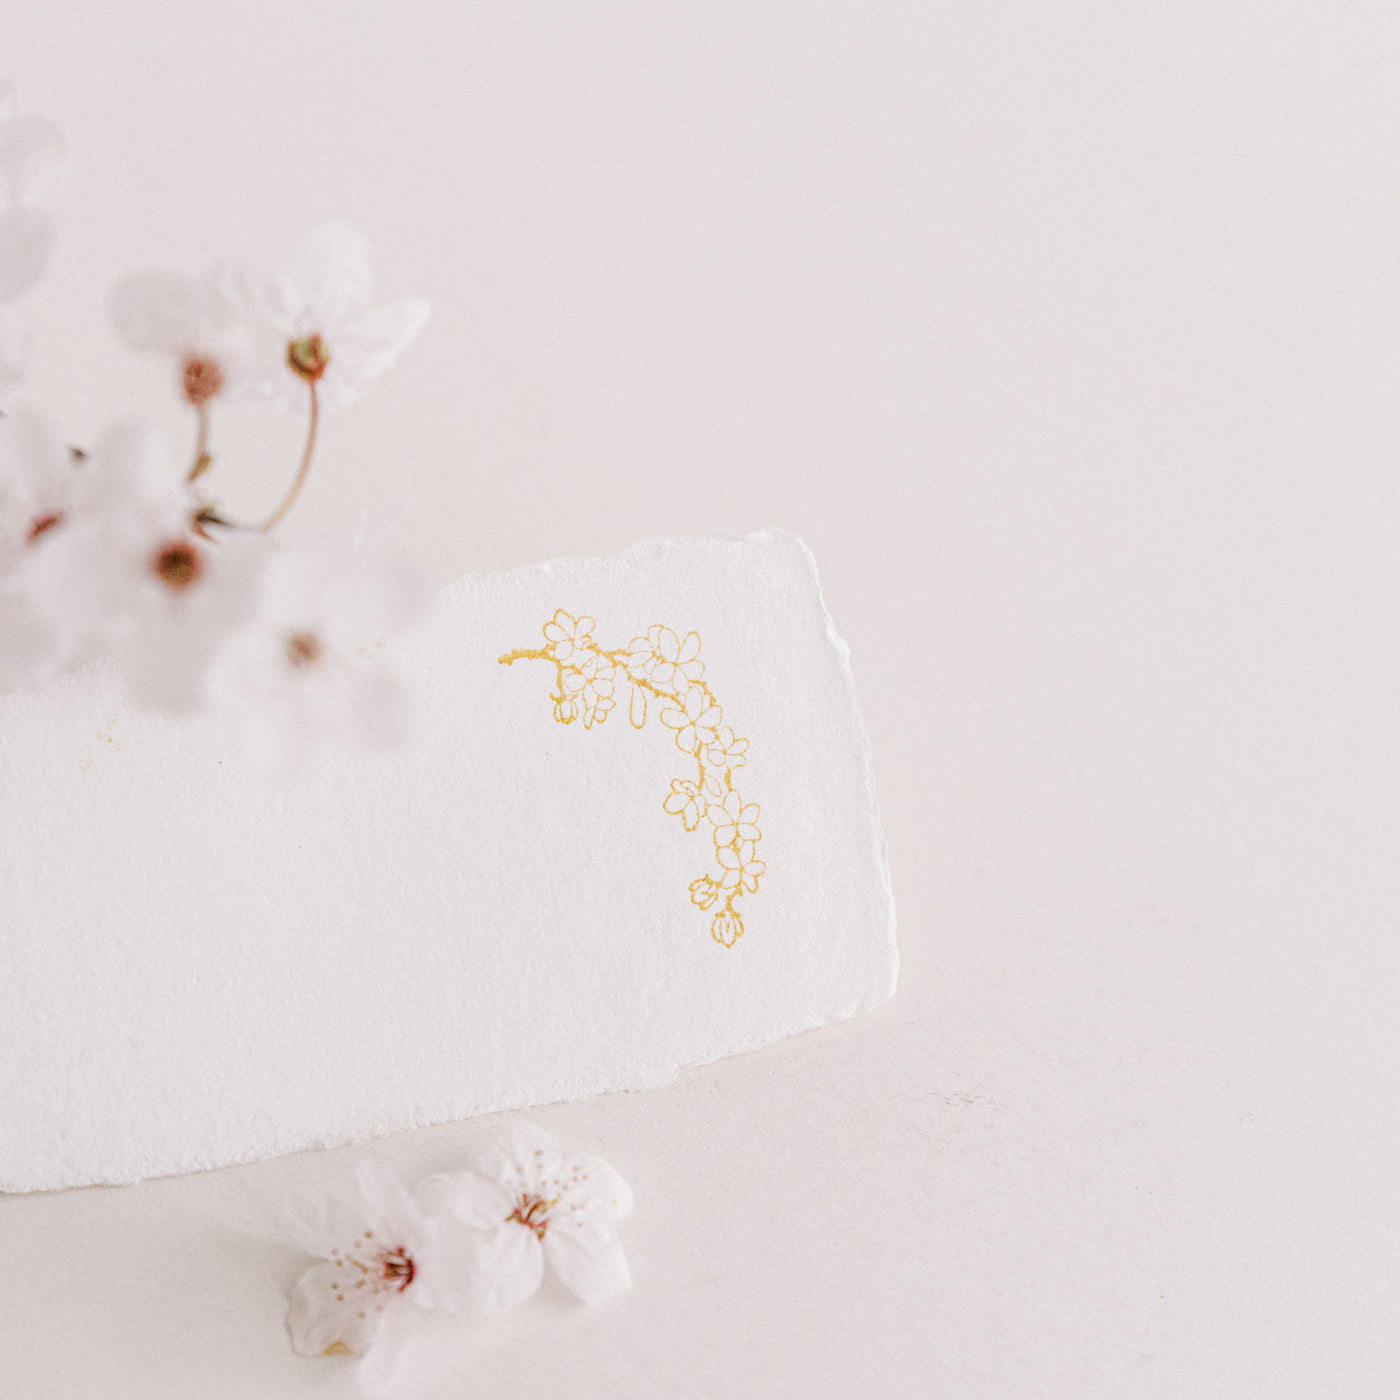 Pink Pearl Cherry Blossom Rubber Stamp for Fine Art Wedding Invitations | 'Sakura' Cherry Blossom Embellishments for Blush Pink Spring Wedding | Heirloom Seals